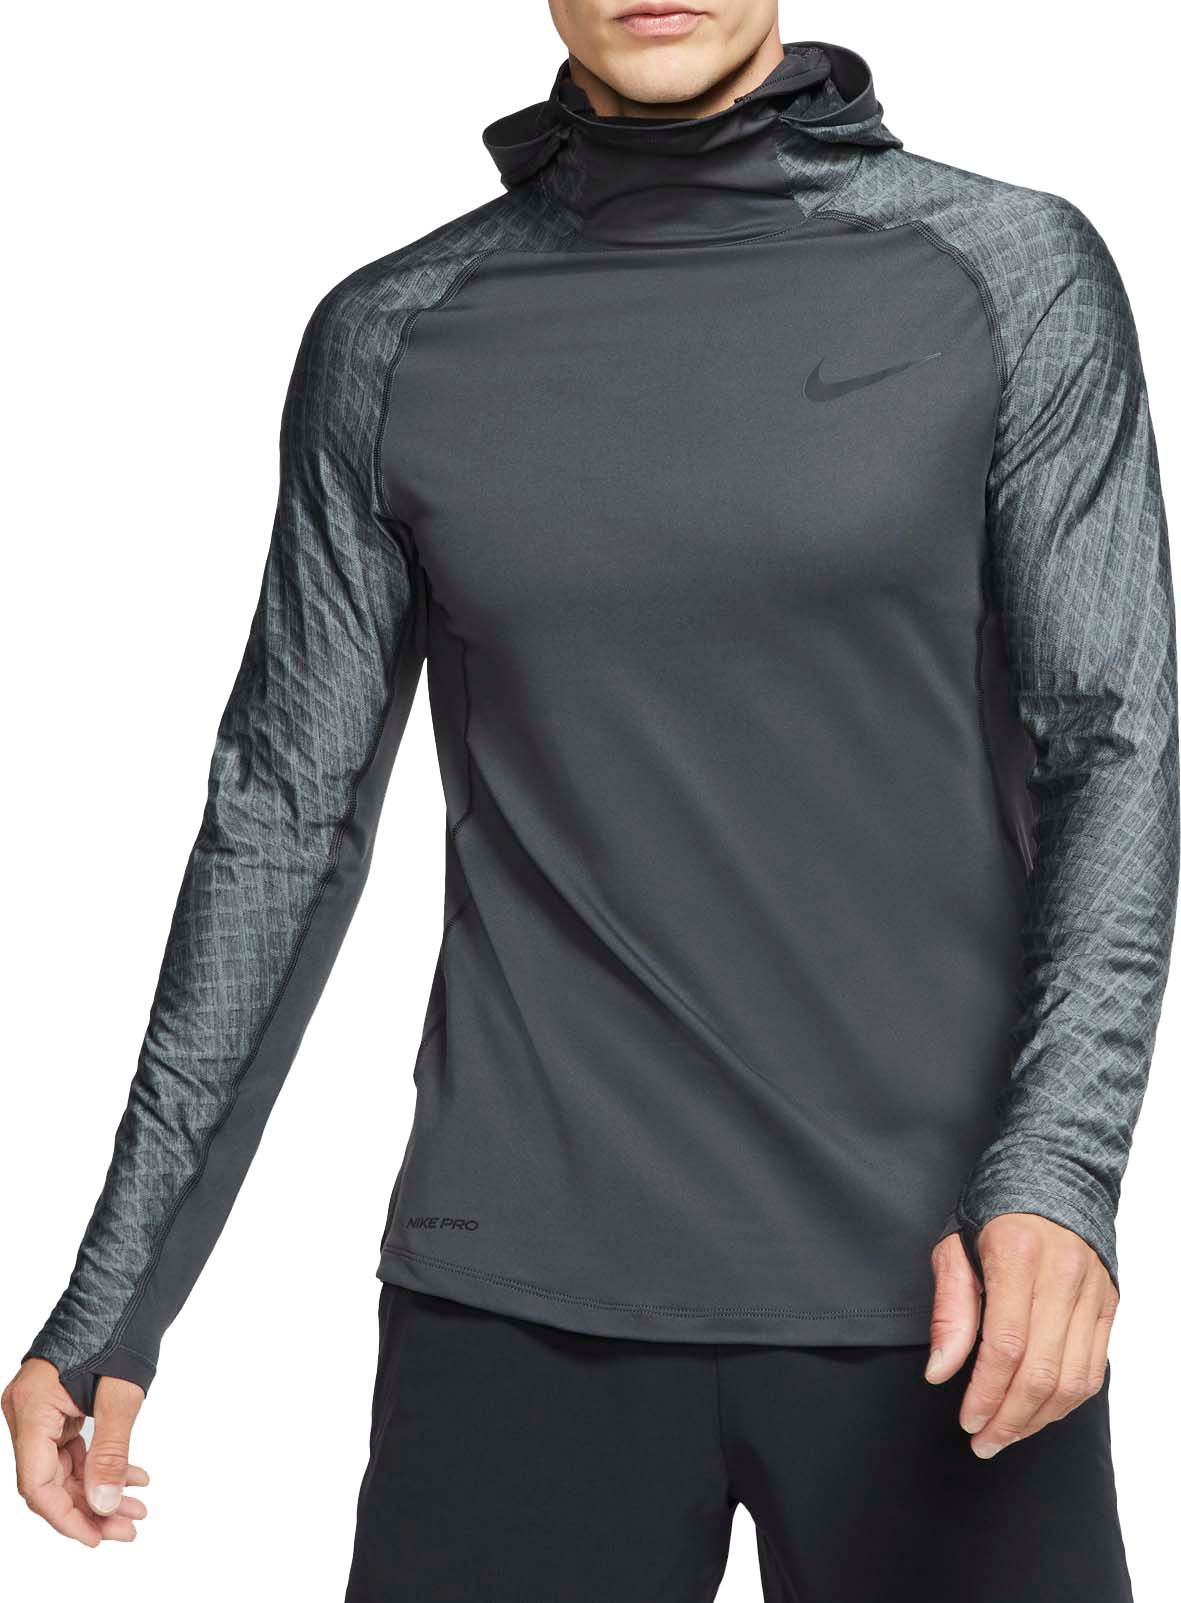 Nike Men's Pro Training Therma Long Sleeve Shirt - .97 - .50